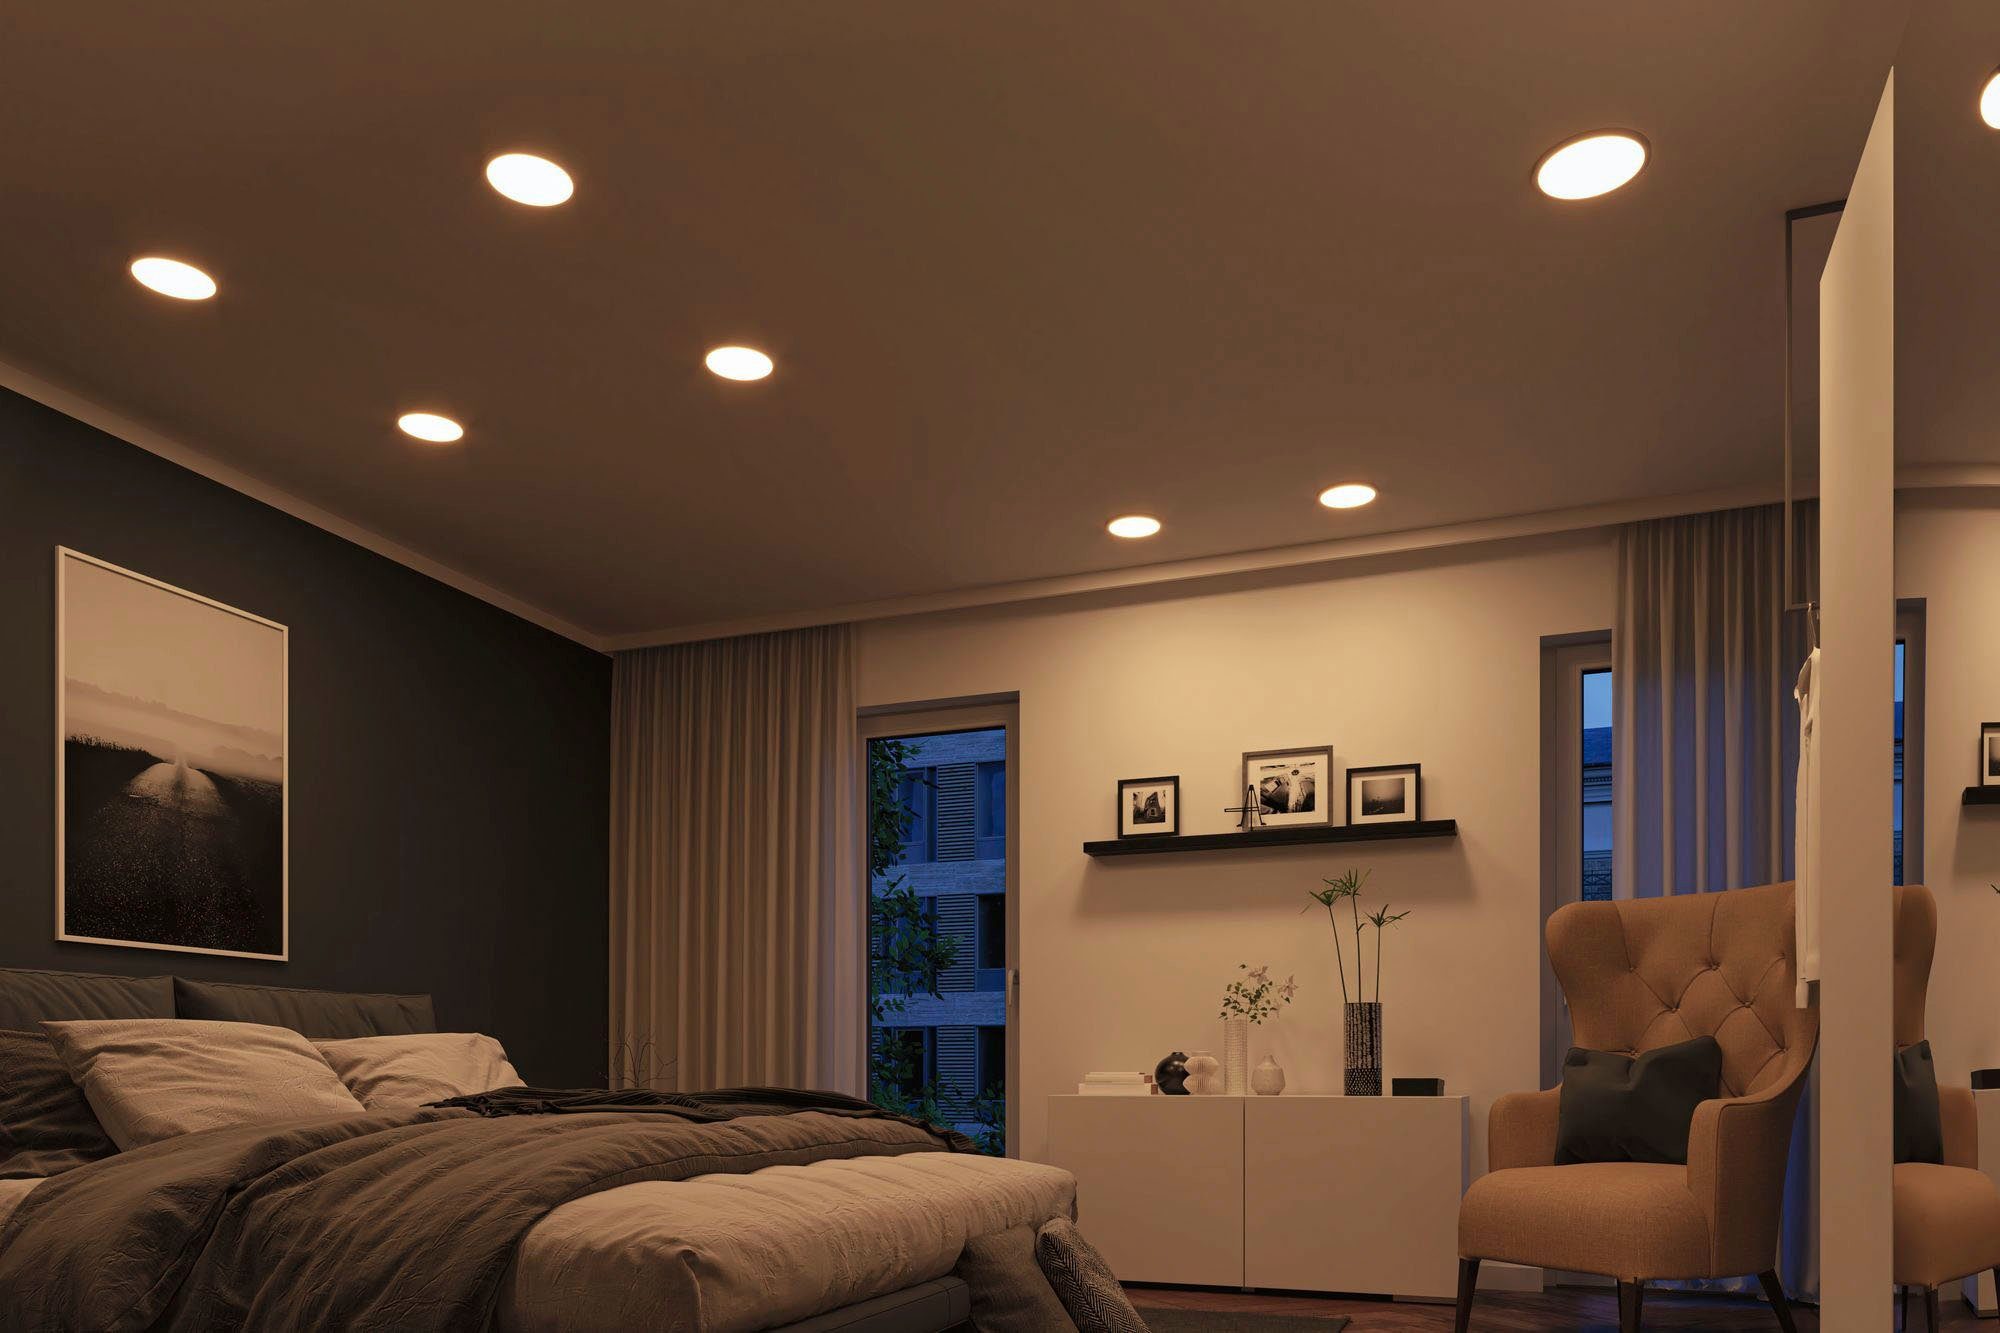 Smart Tunable Areo, Einbauleuchte White LED kaltweiß, LED-Modul, - LED fest warmweiß Home, Weiß integriert, Paulmann